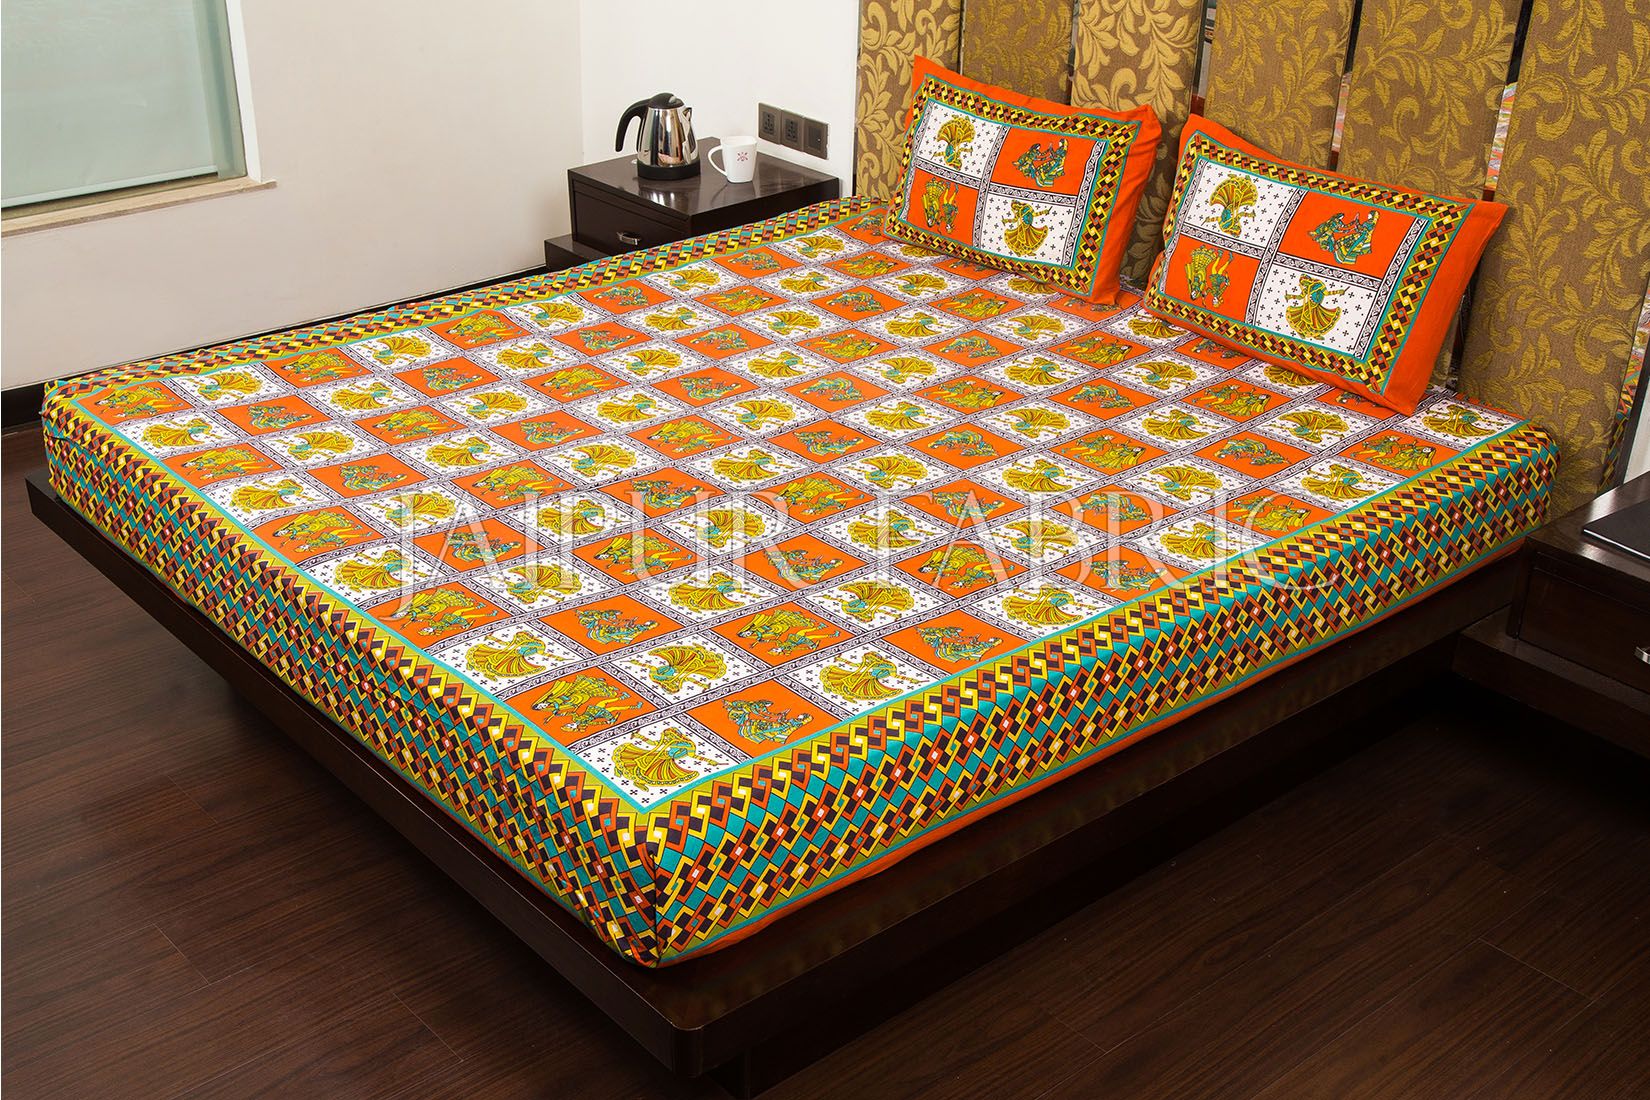 Orange Color Jaipuri Folk Dance Print Cotton Double Bed Sheet